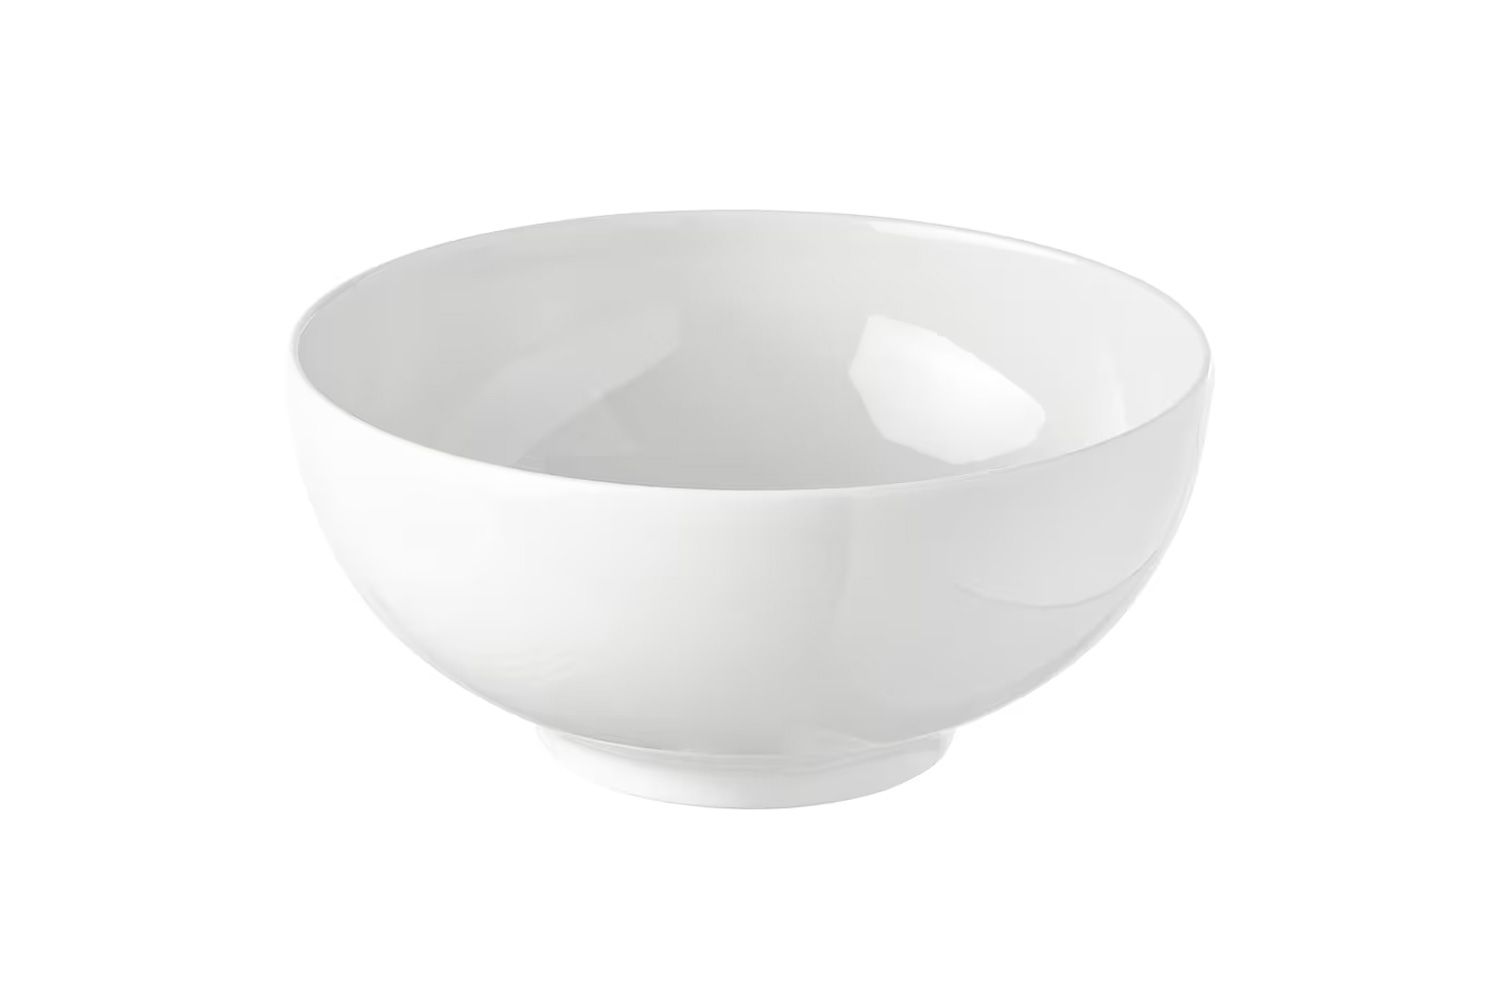 IKEA 365+ 7.5-inch Bowl